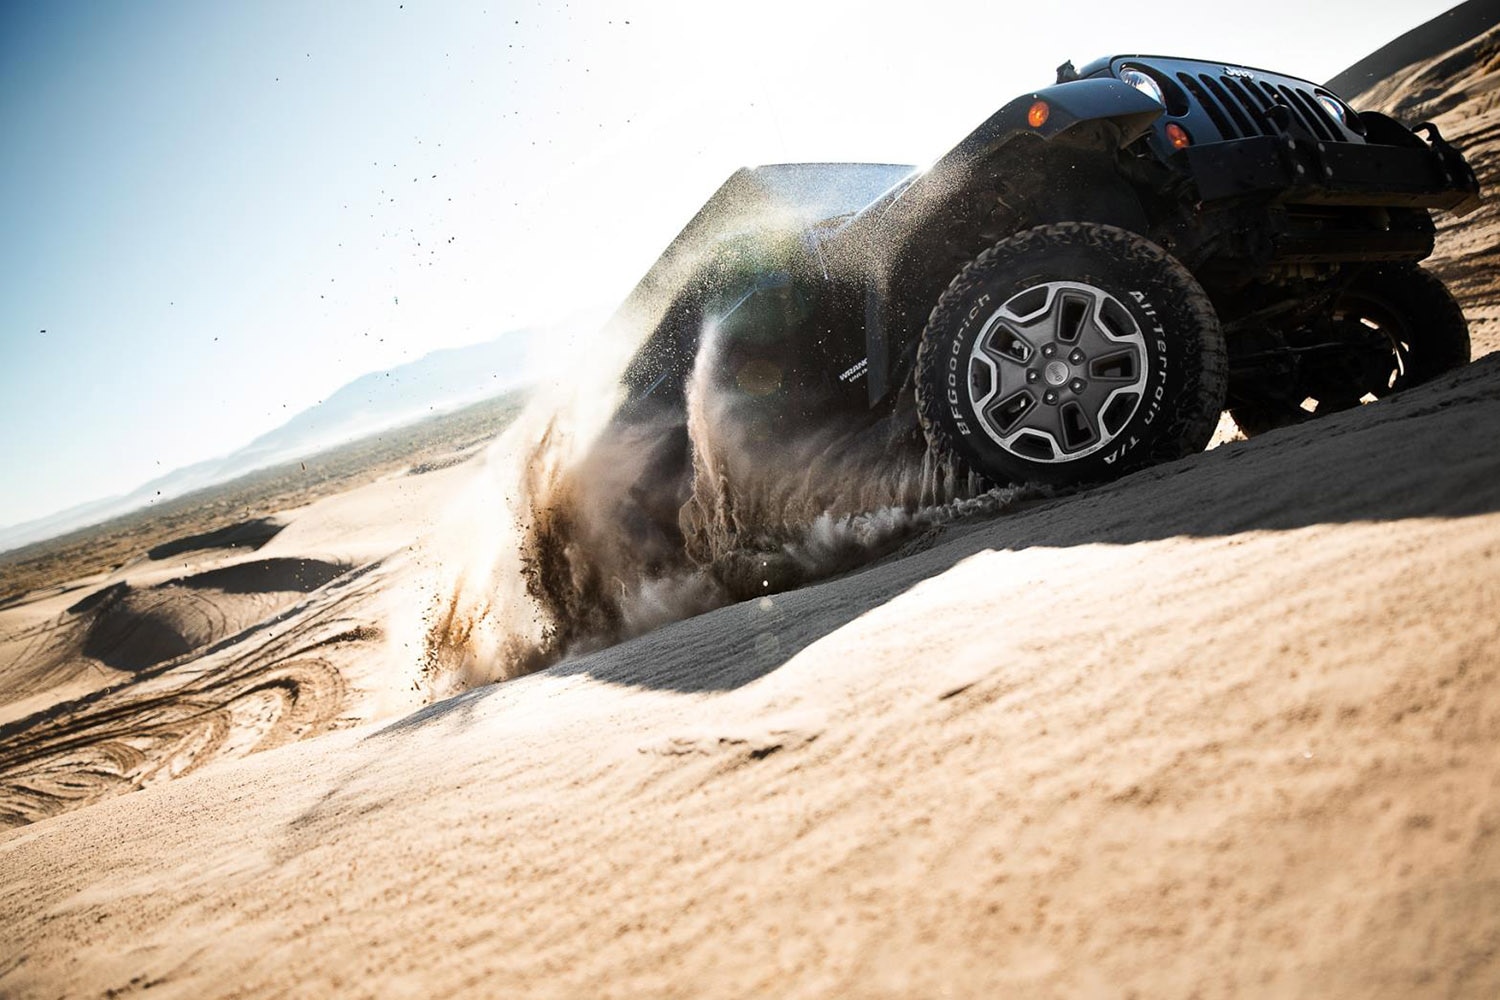 Jeep Wrangler with BFGoodrich all-terrain tires on sand dune.